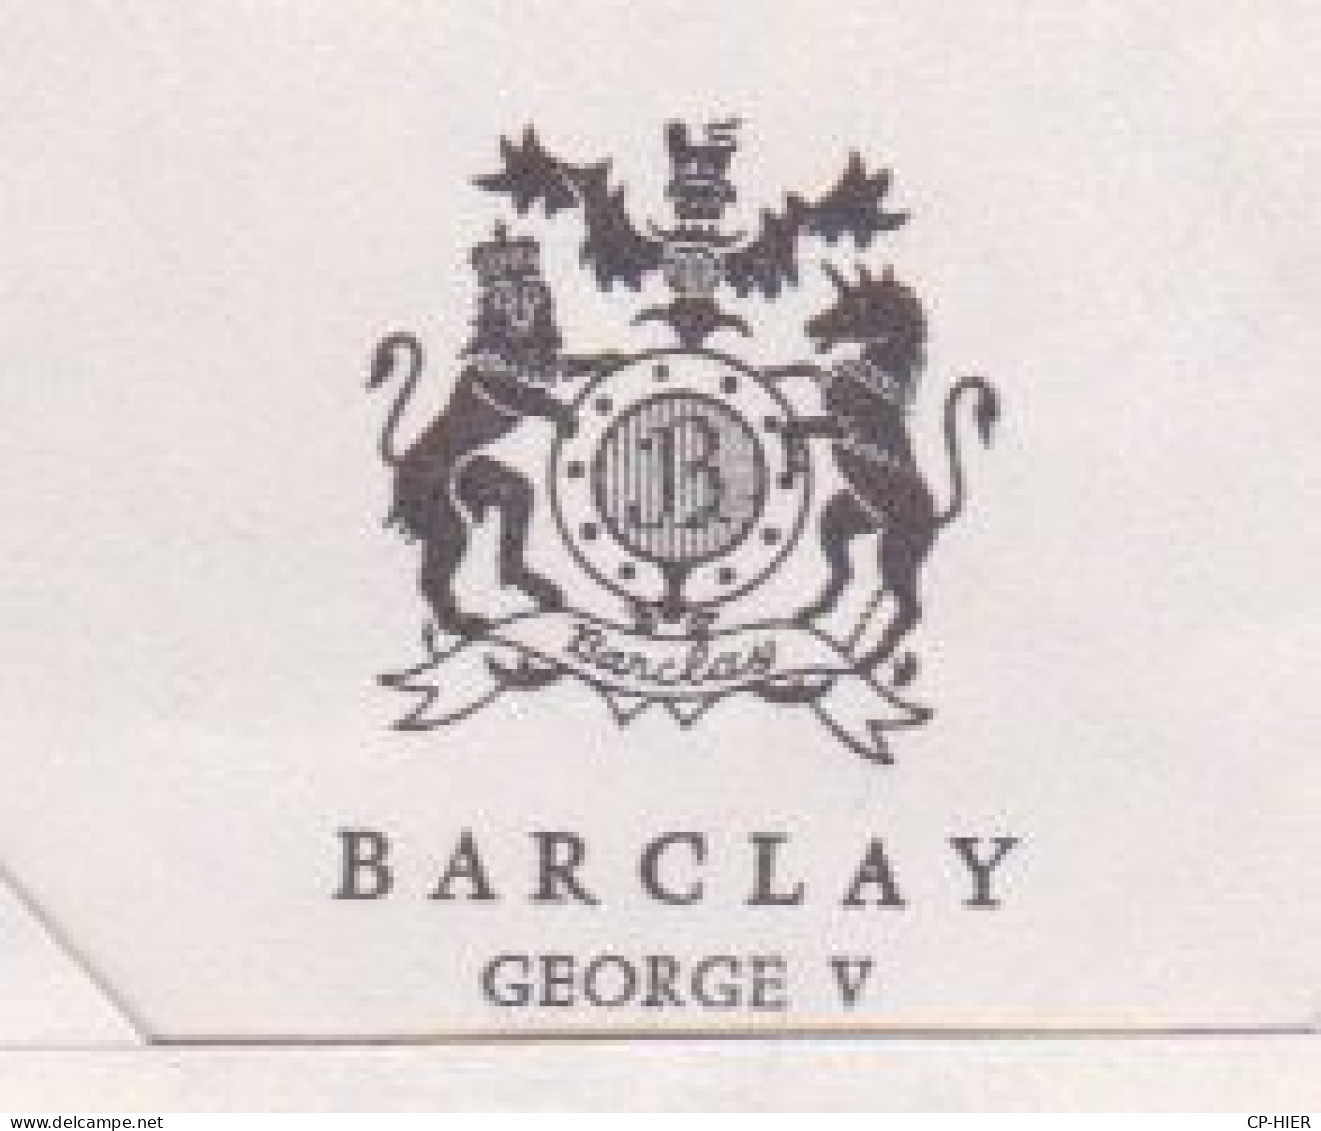 FRANCE - FLAMME  VICHY  - PORT PAYE PP  - 1971 - VICHY - SANTE VACANCES - ENVELOPPE BARCLAY - Mechanical Postmarks (Advertisement)